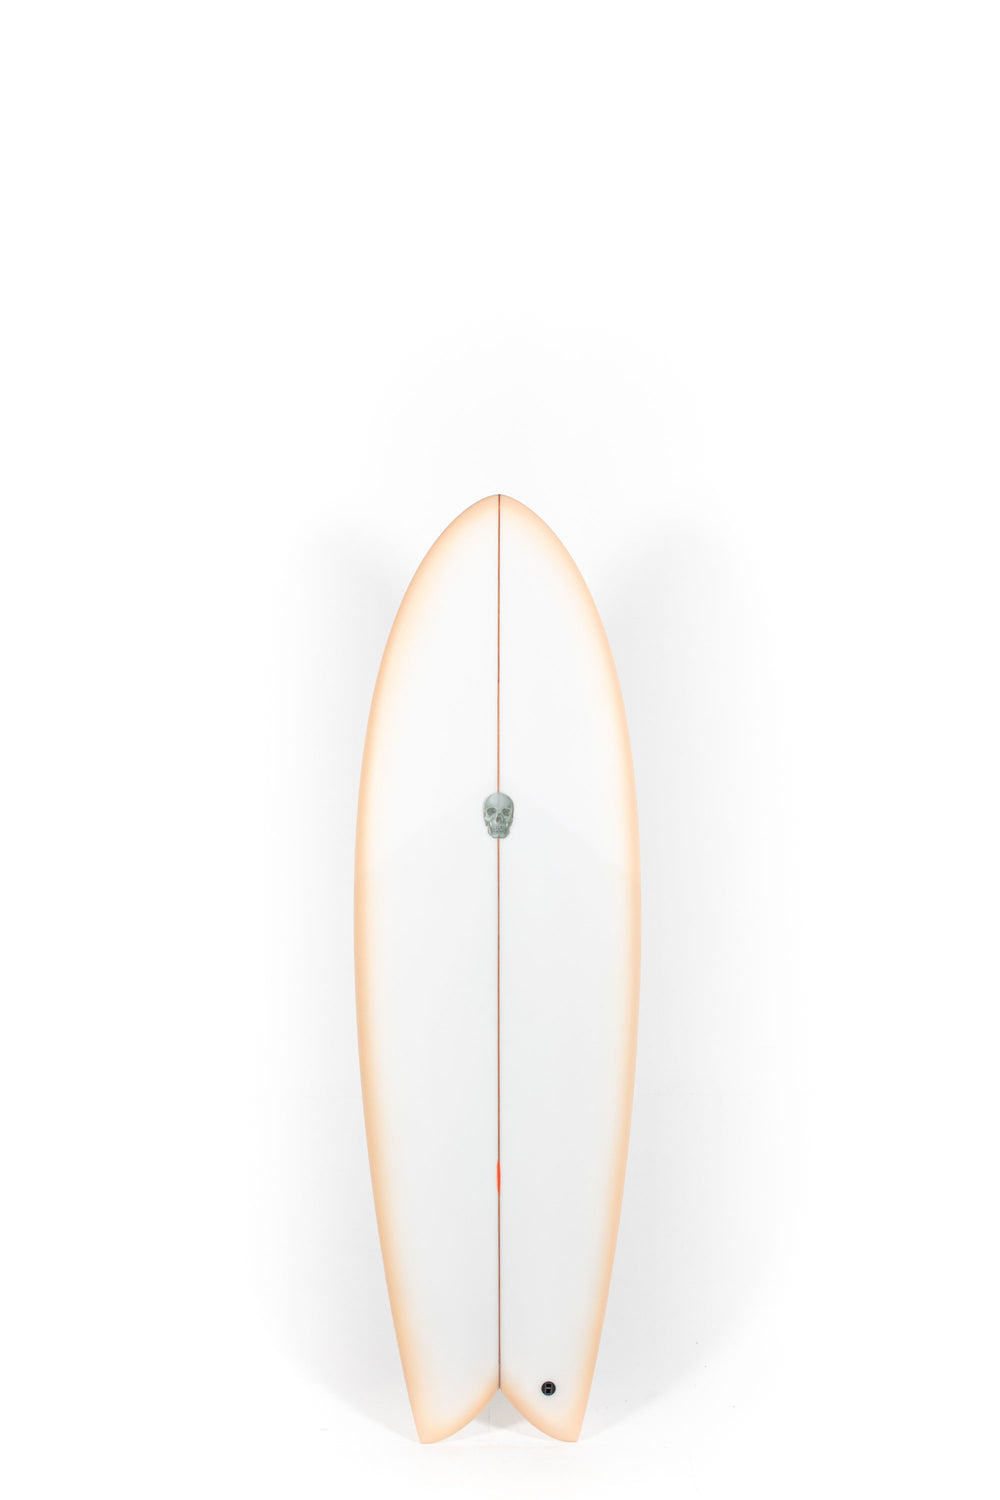 Pukas Surf Shop - Christenson Surfboards - MYCONAUT - 5'9